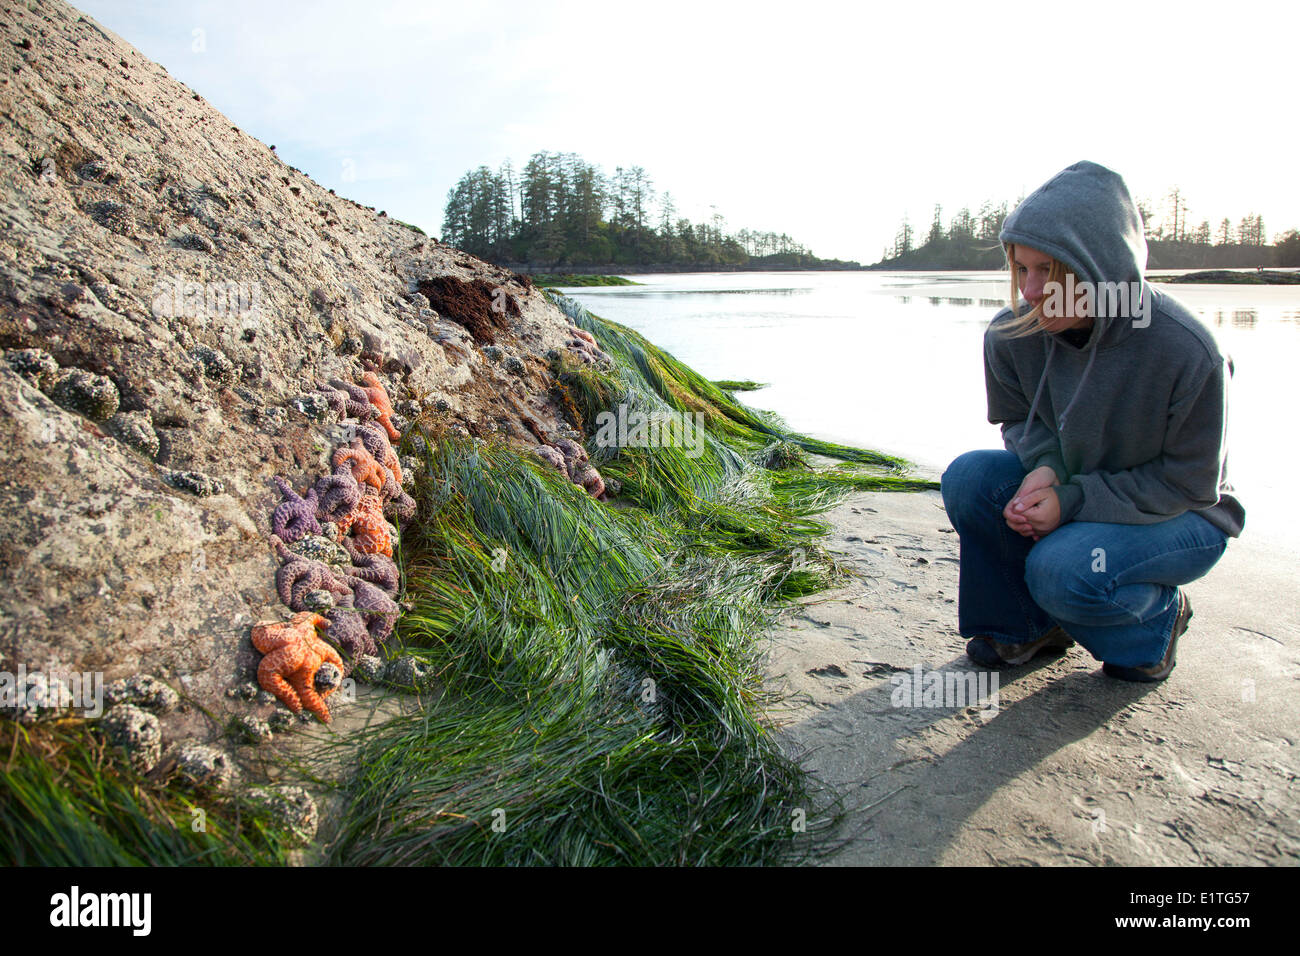 A woman looks at sea stars starfish at Schooner Cove near Long Beach in Pacific Rim National Park near Tofino British Columbia Stock Photo